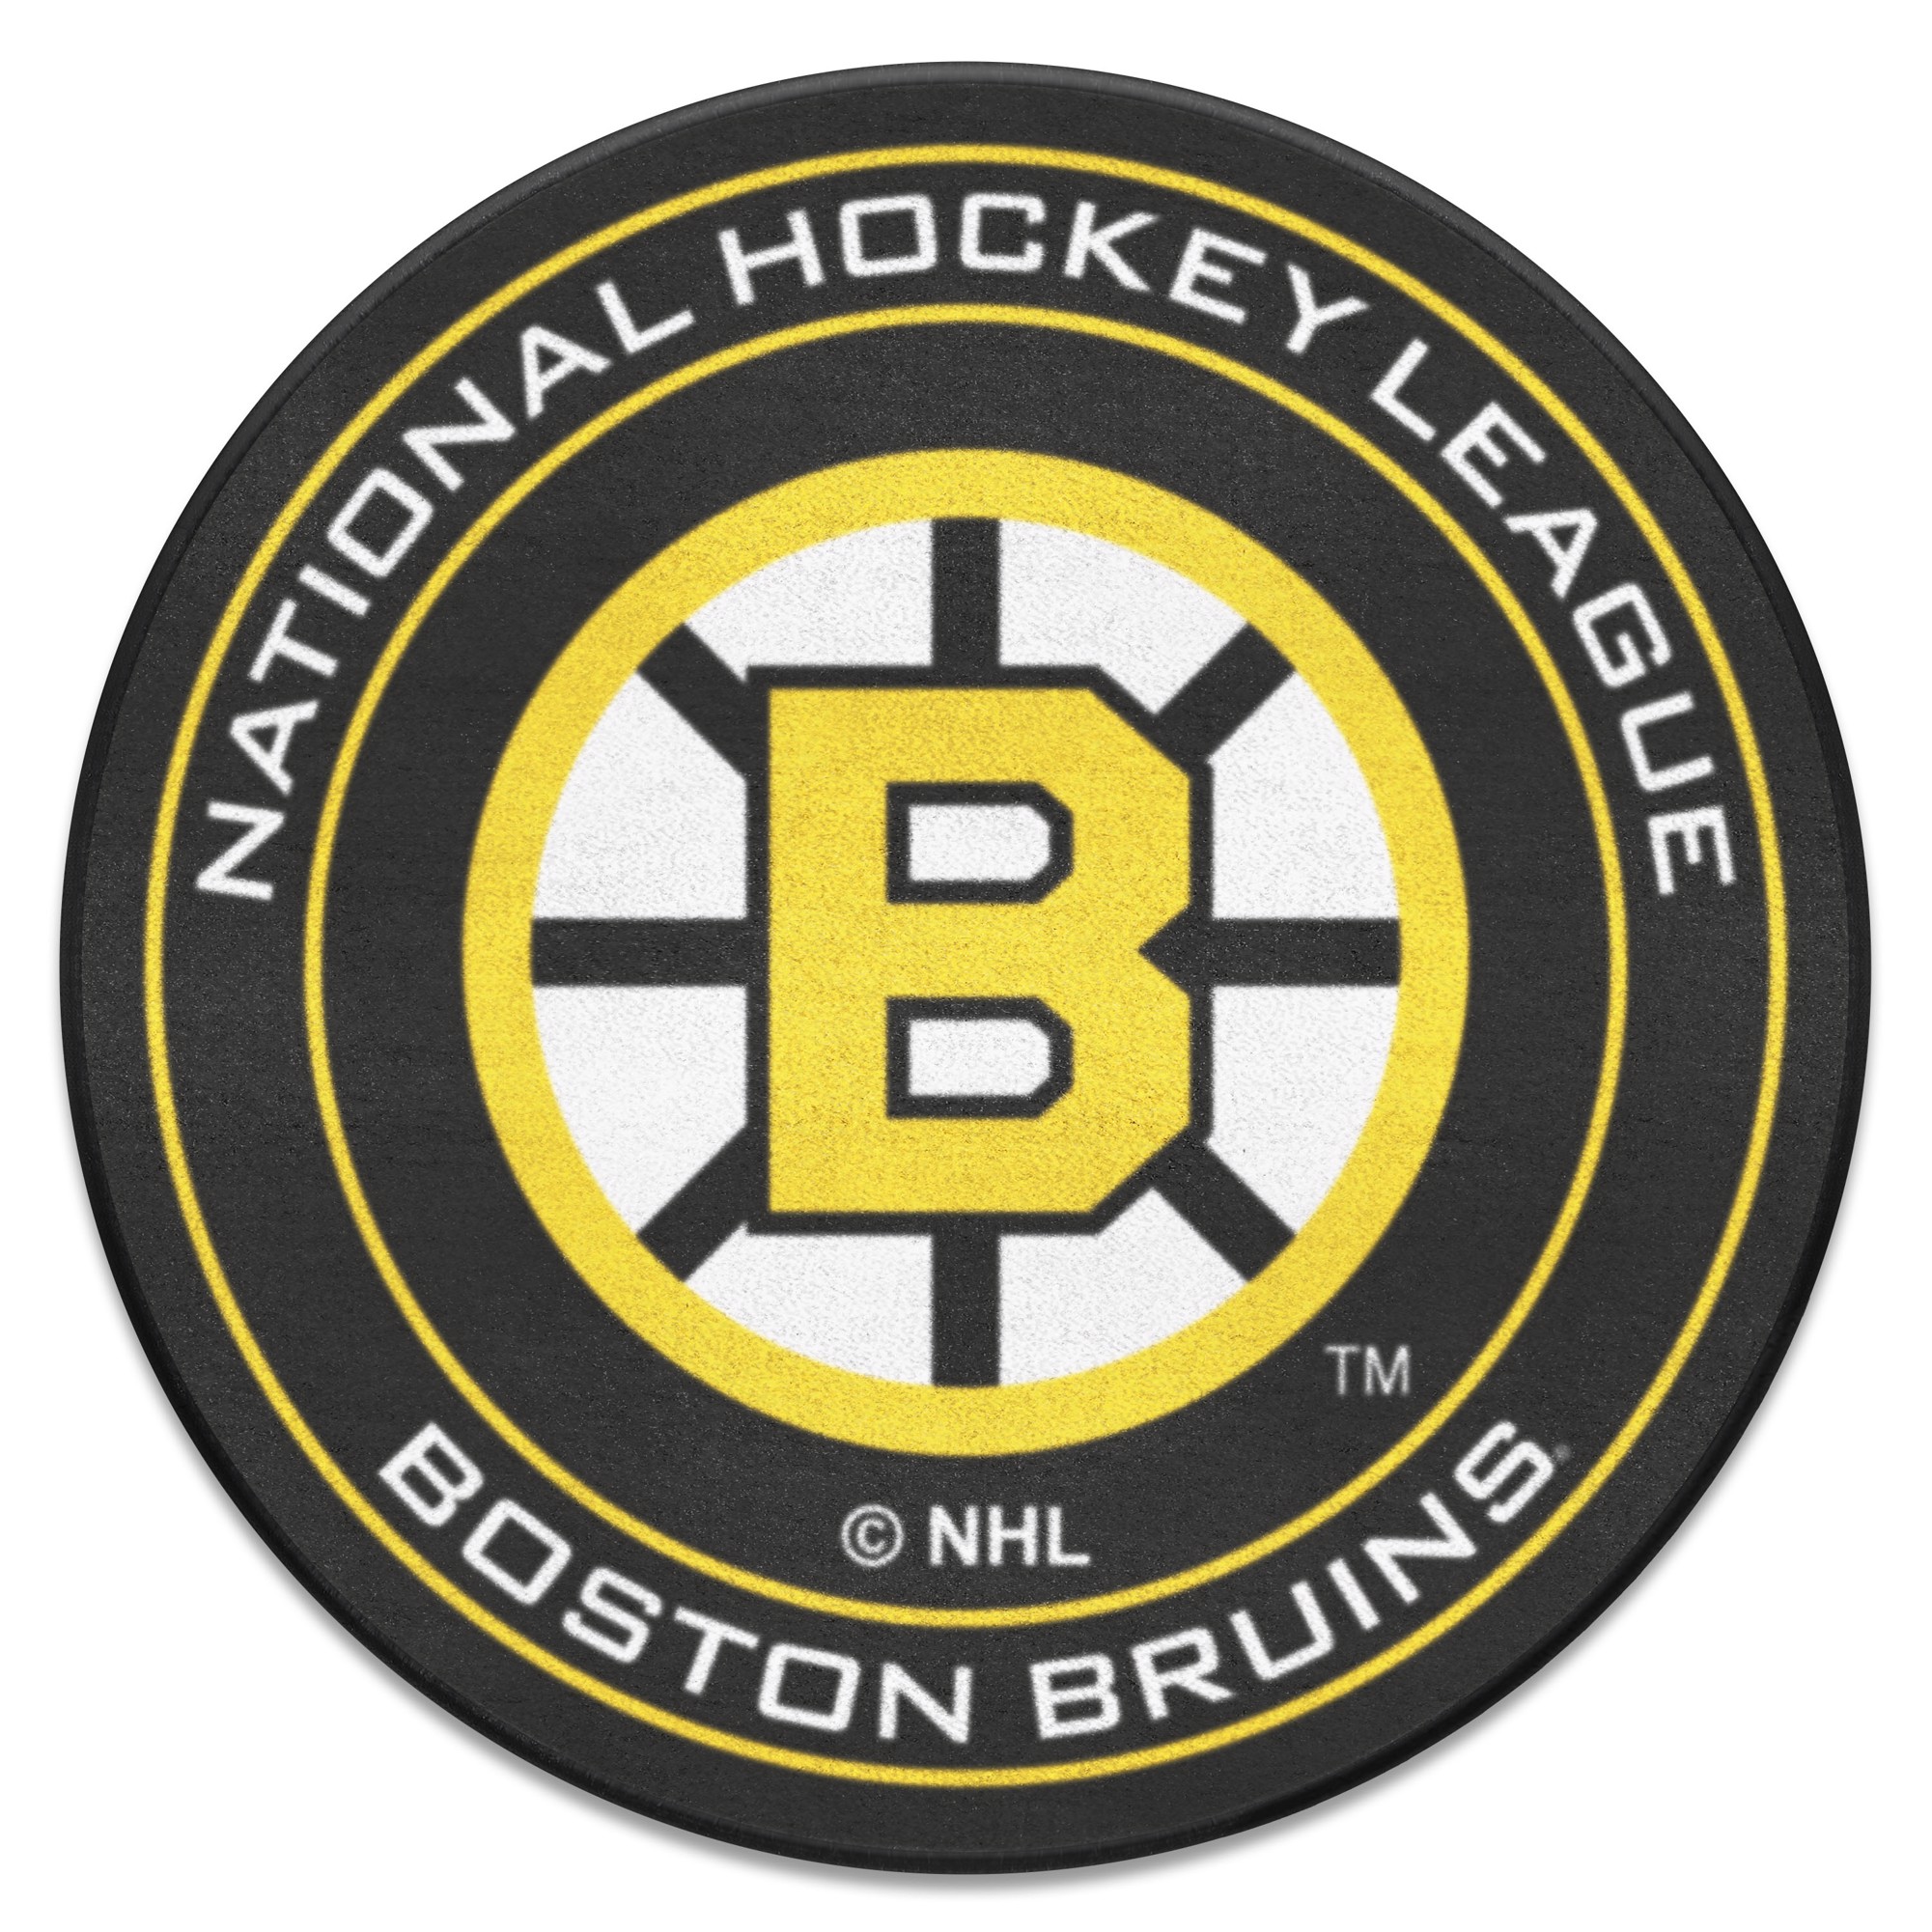 Boston Bruins Uniform Starter Rug 19x30 